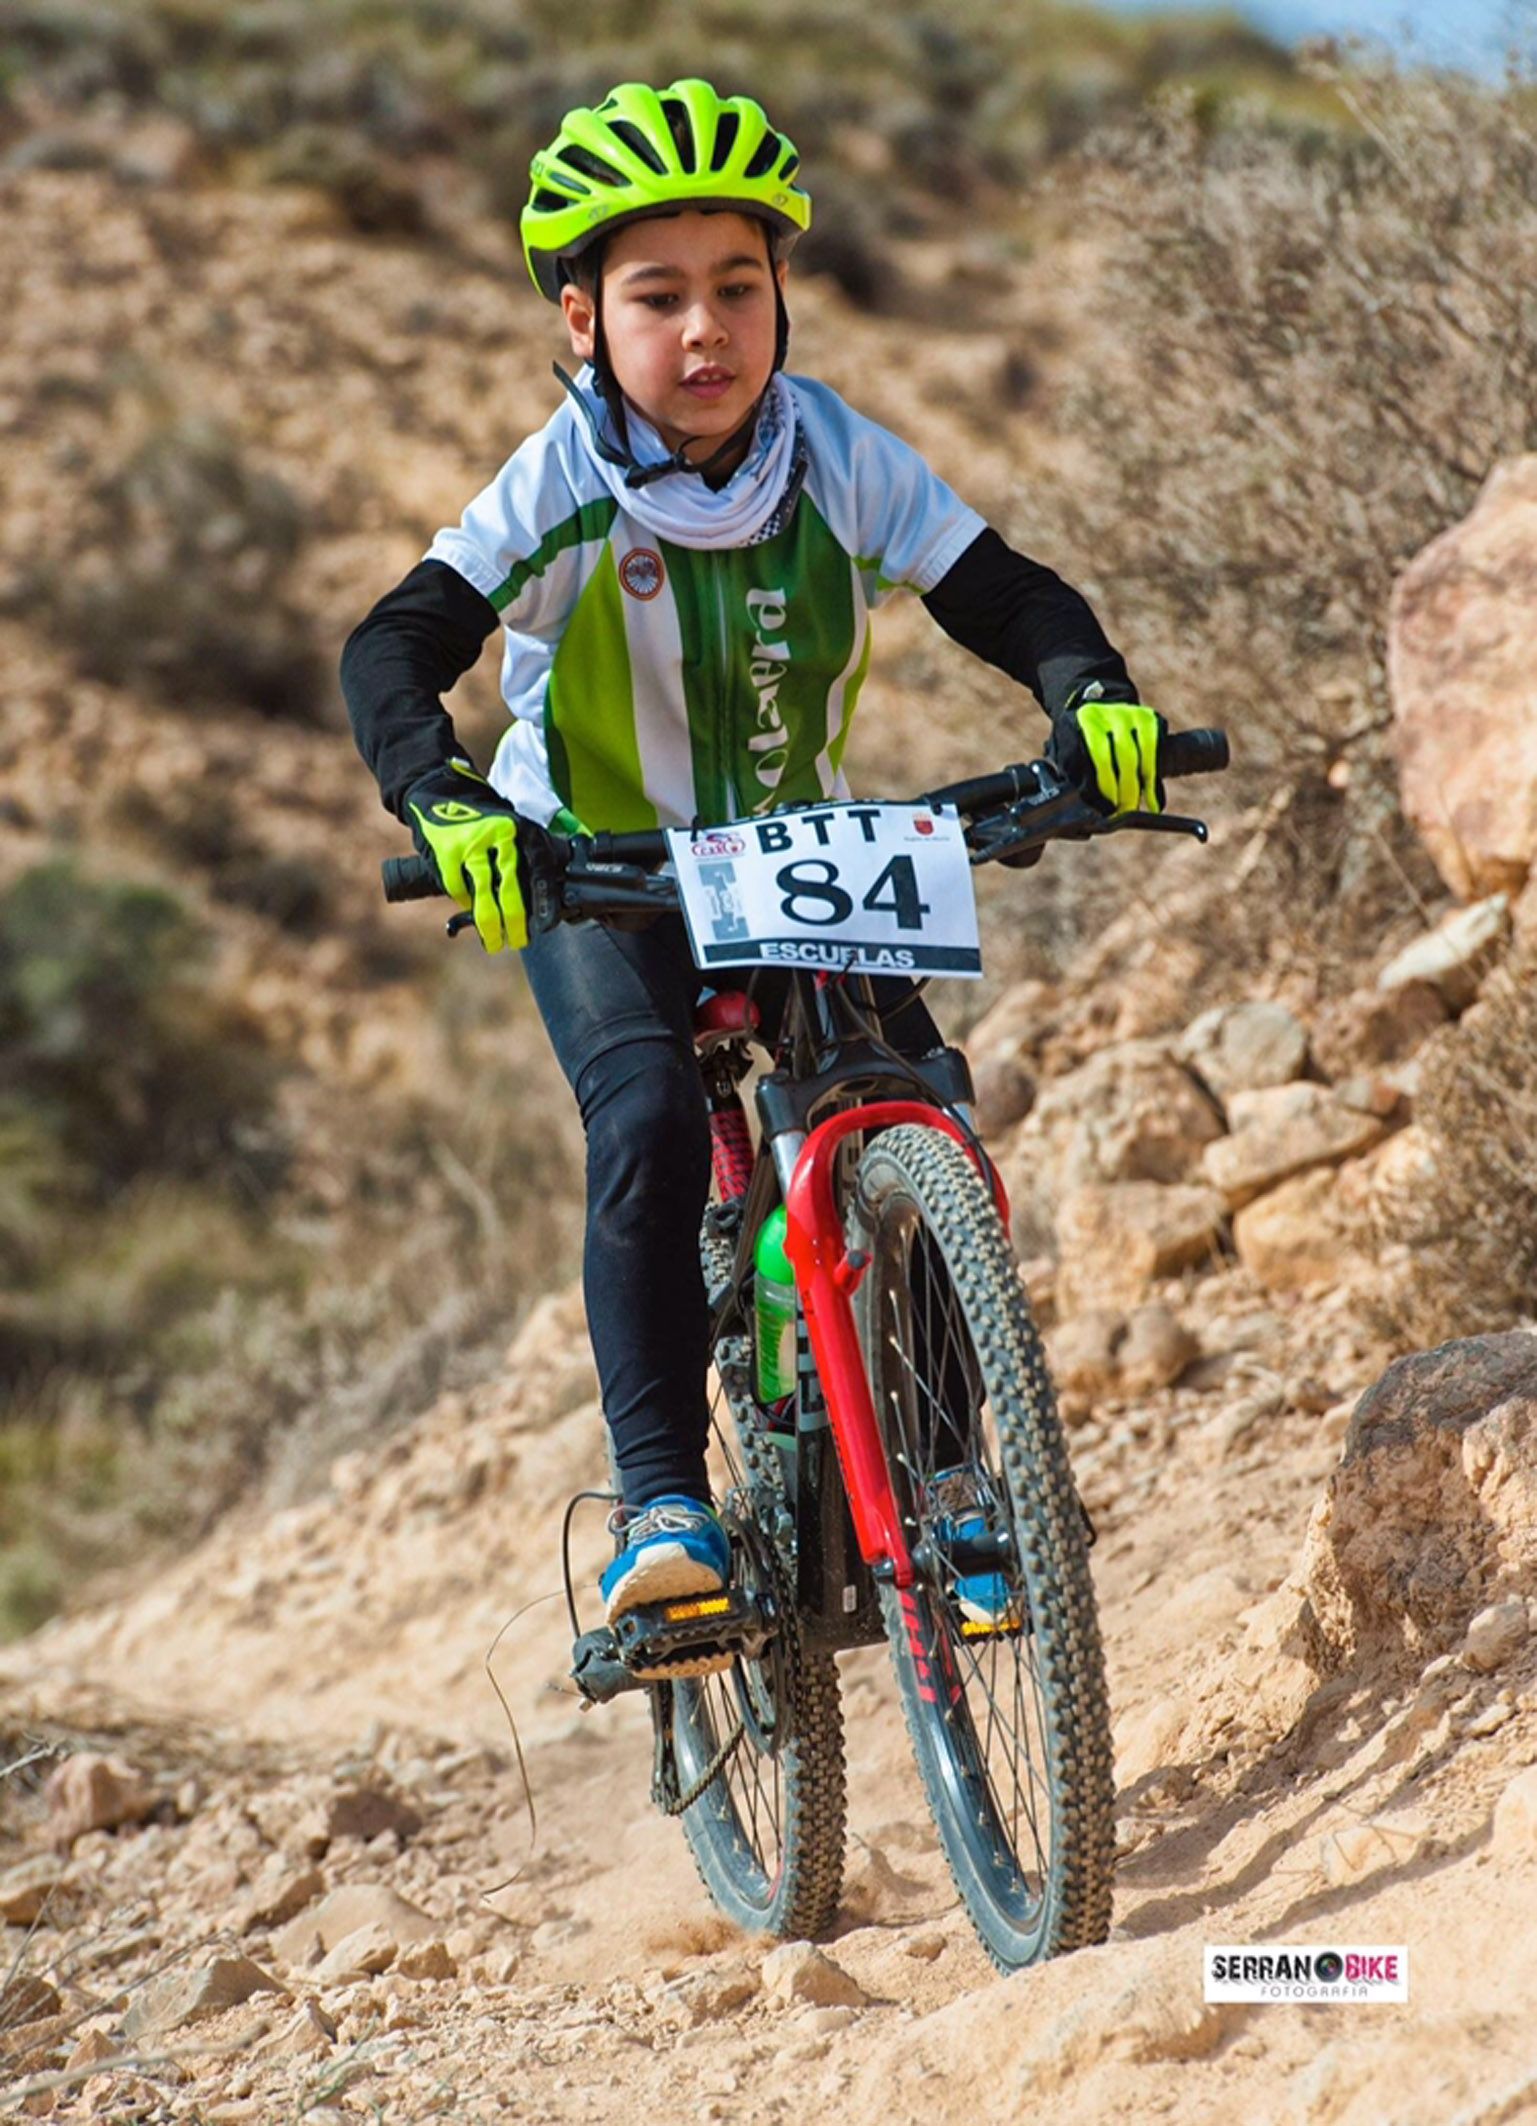 el-torreno-pablo-pina-campeon-regional-promesas-en-mountain-bike3